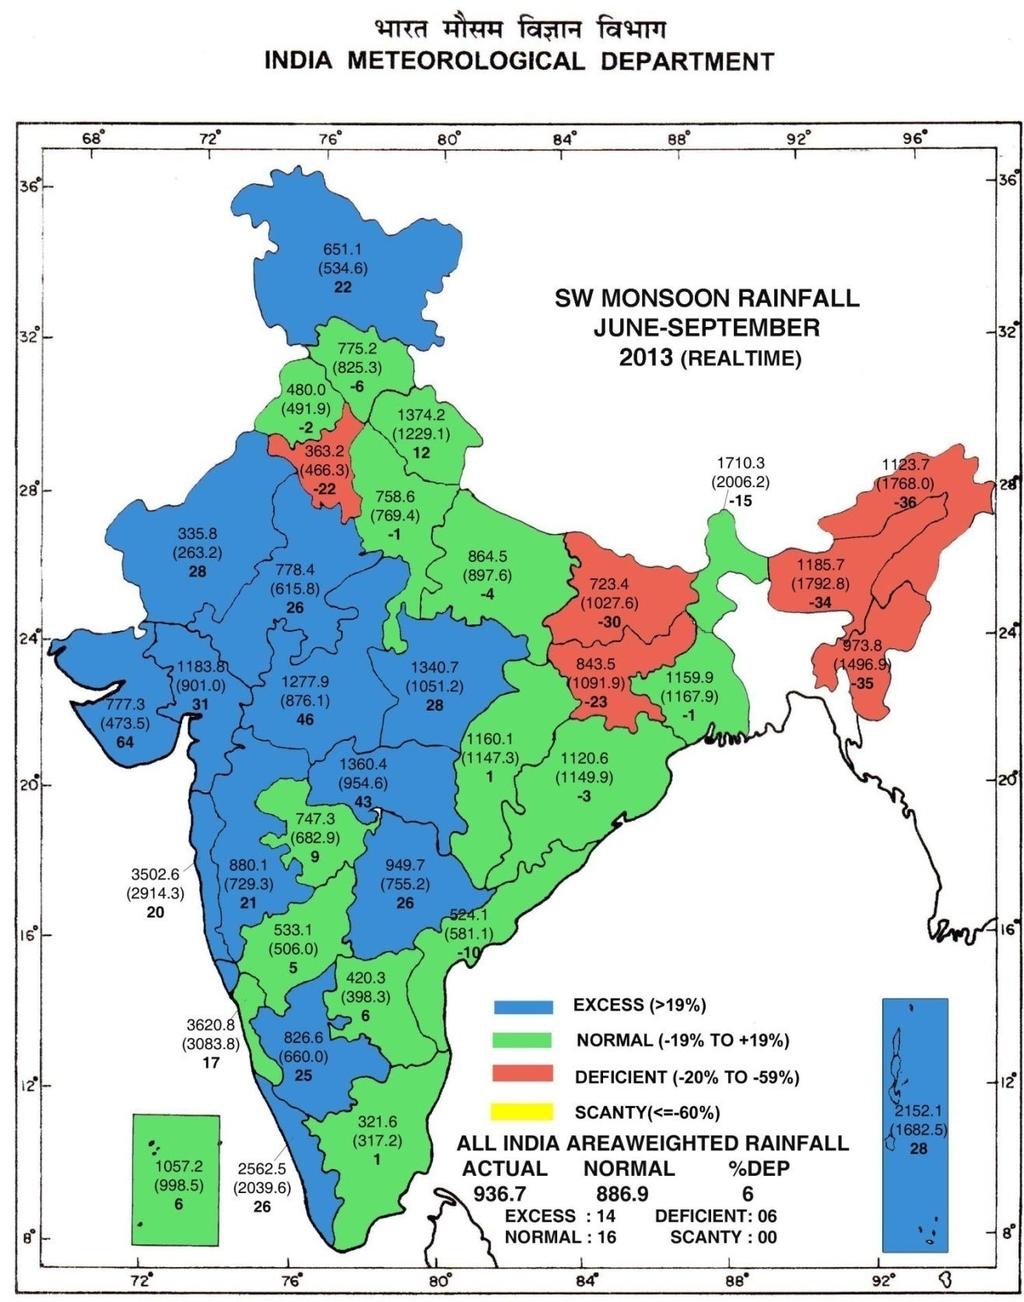 Source: Indian Meteorological Department Figure 3